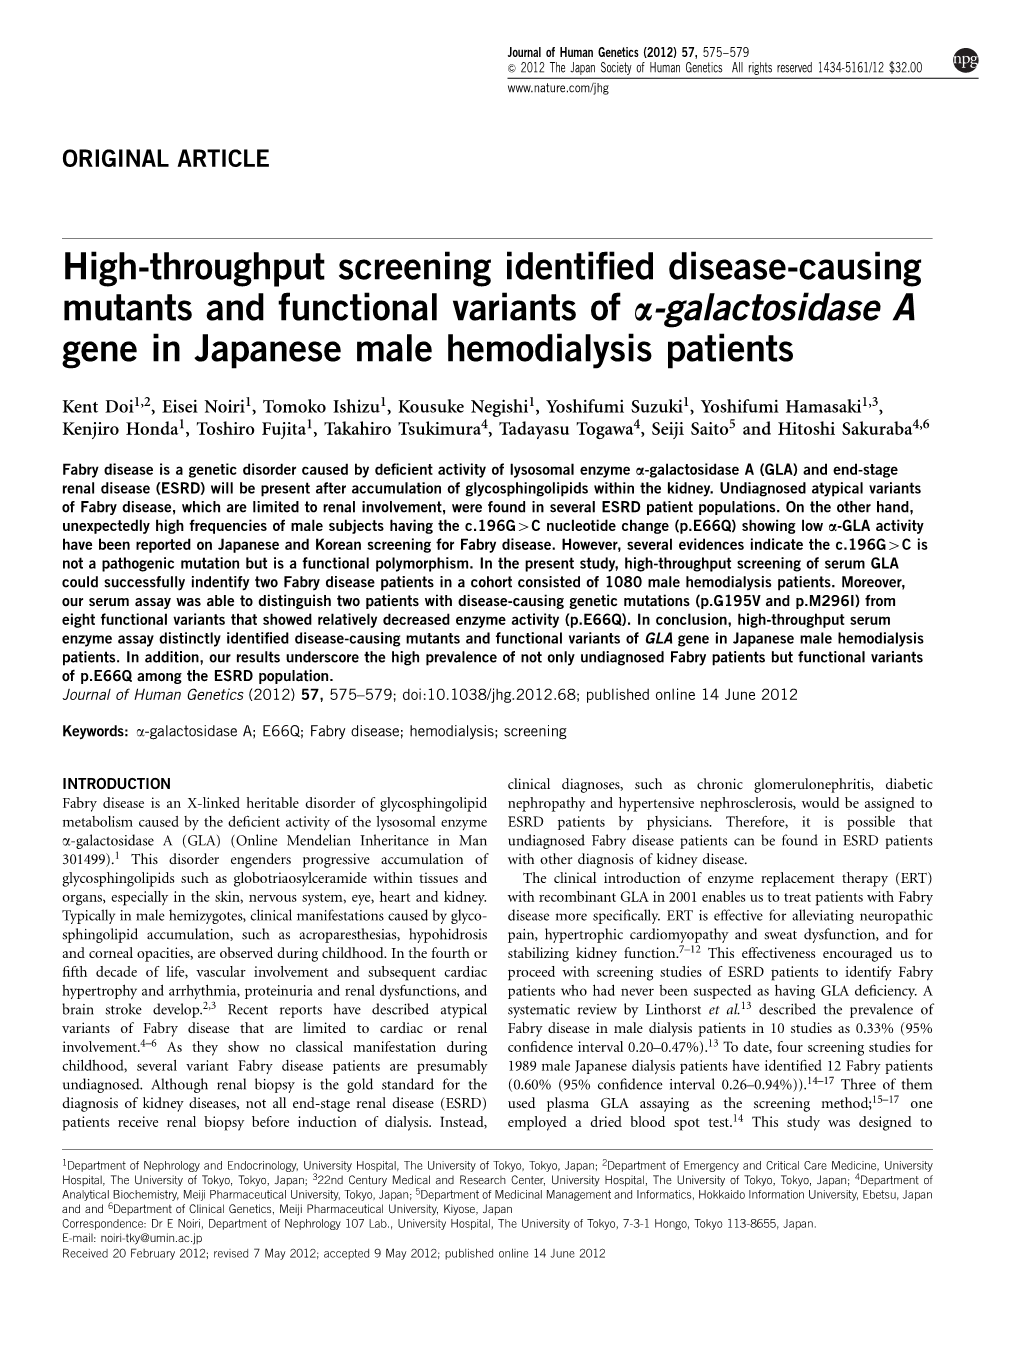 High-Throughput Screening Identified Disease-Causing Mutants and Functional Variants of &Alpha;-Galactosidase a Gene in Japa